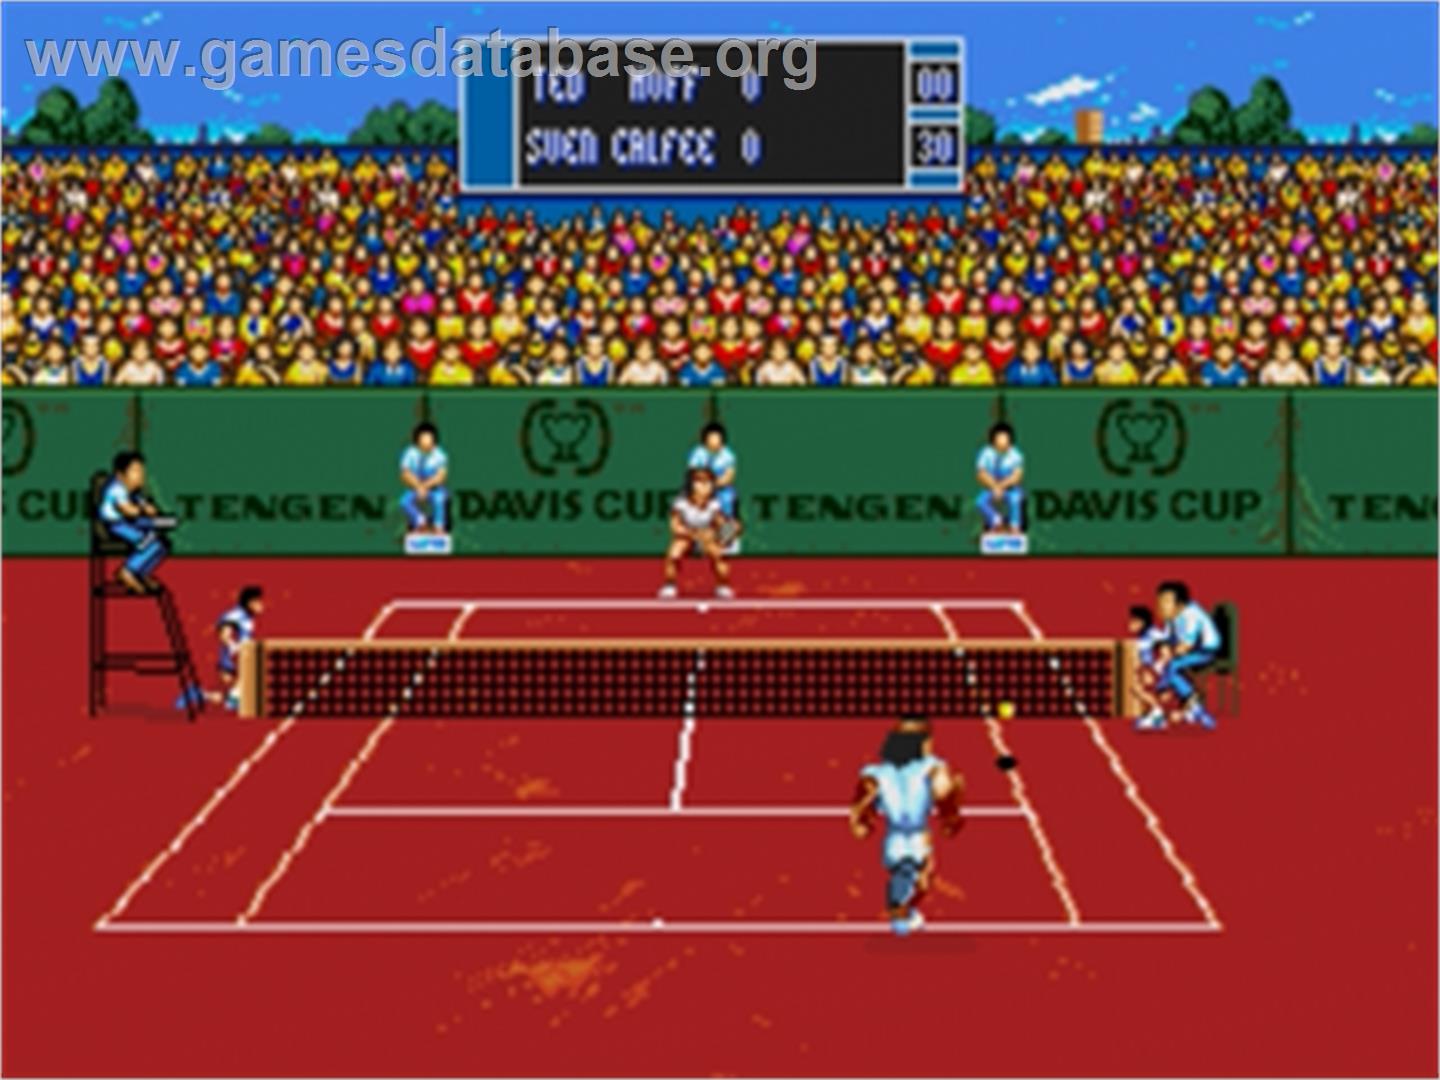 Davis Cup World Tour Tennis - Sega Genesis - Artwork - In Game